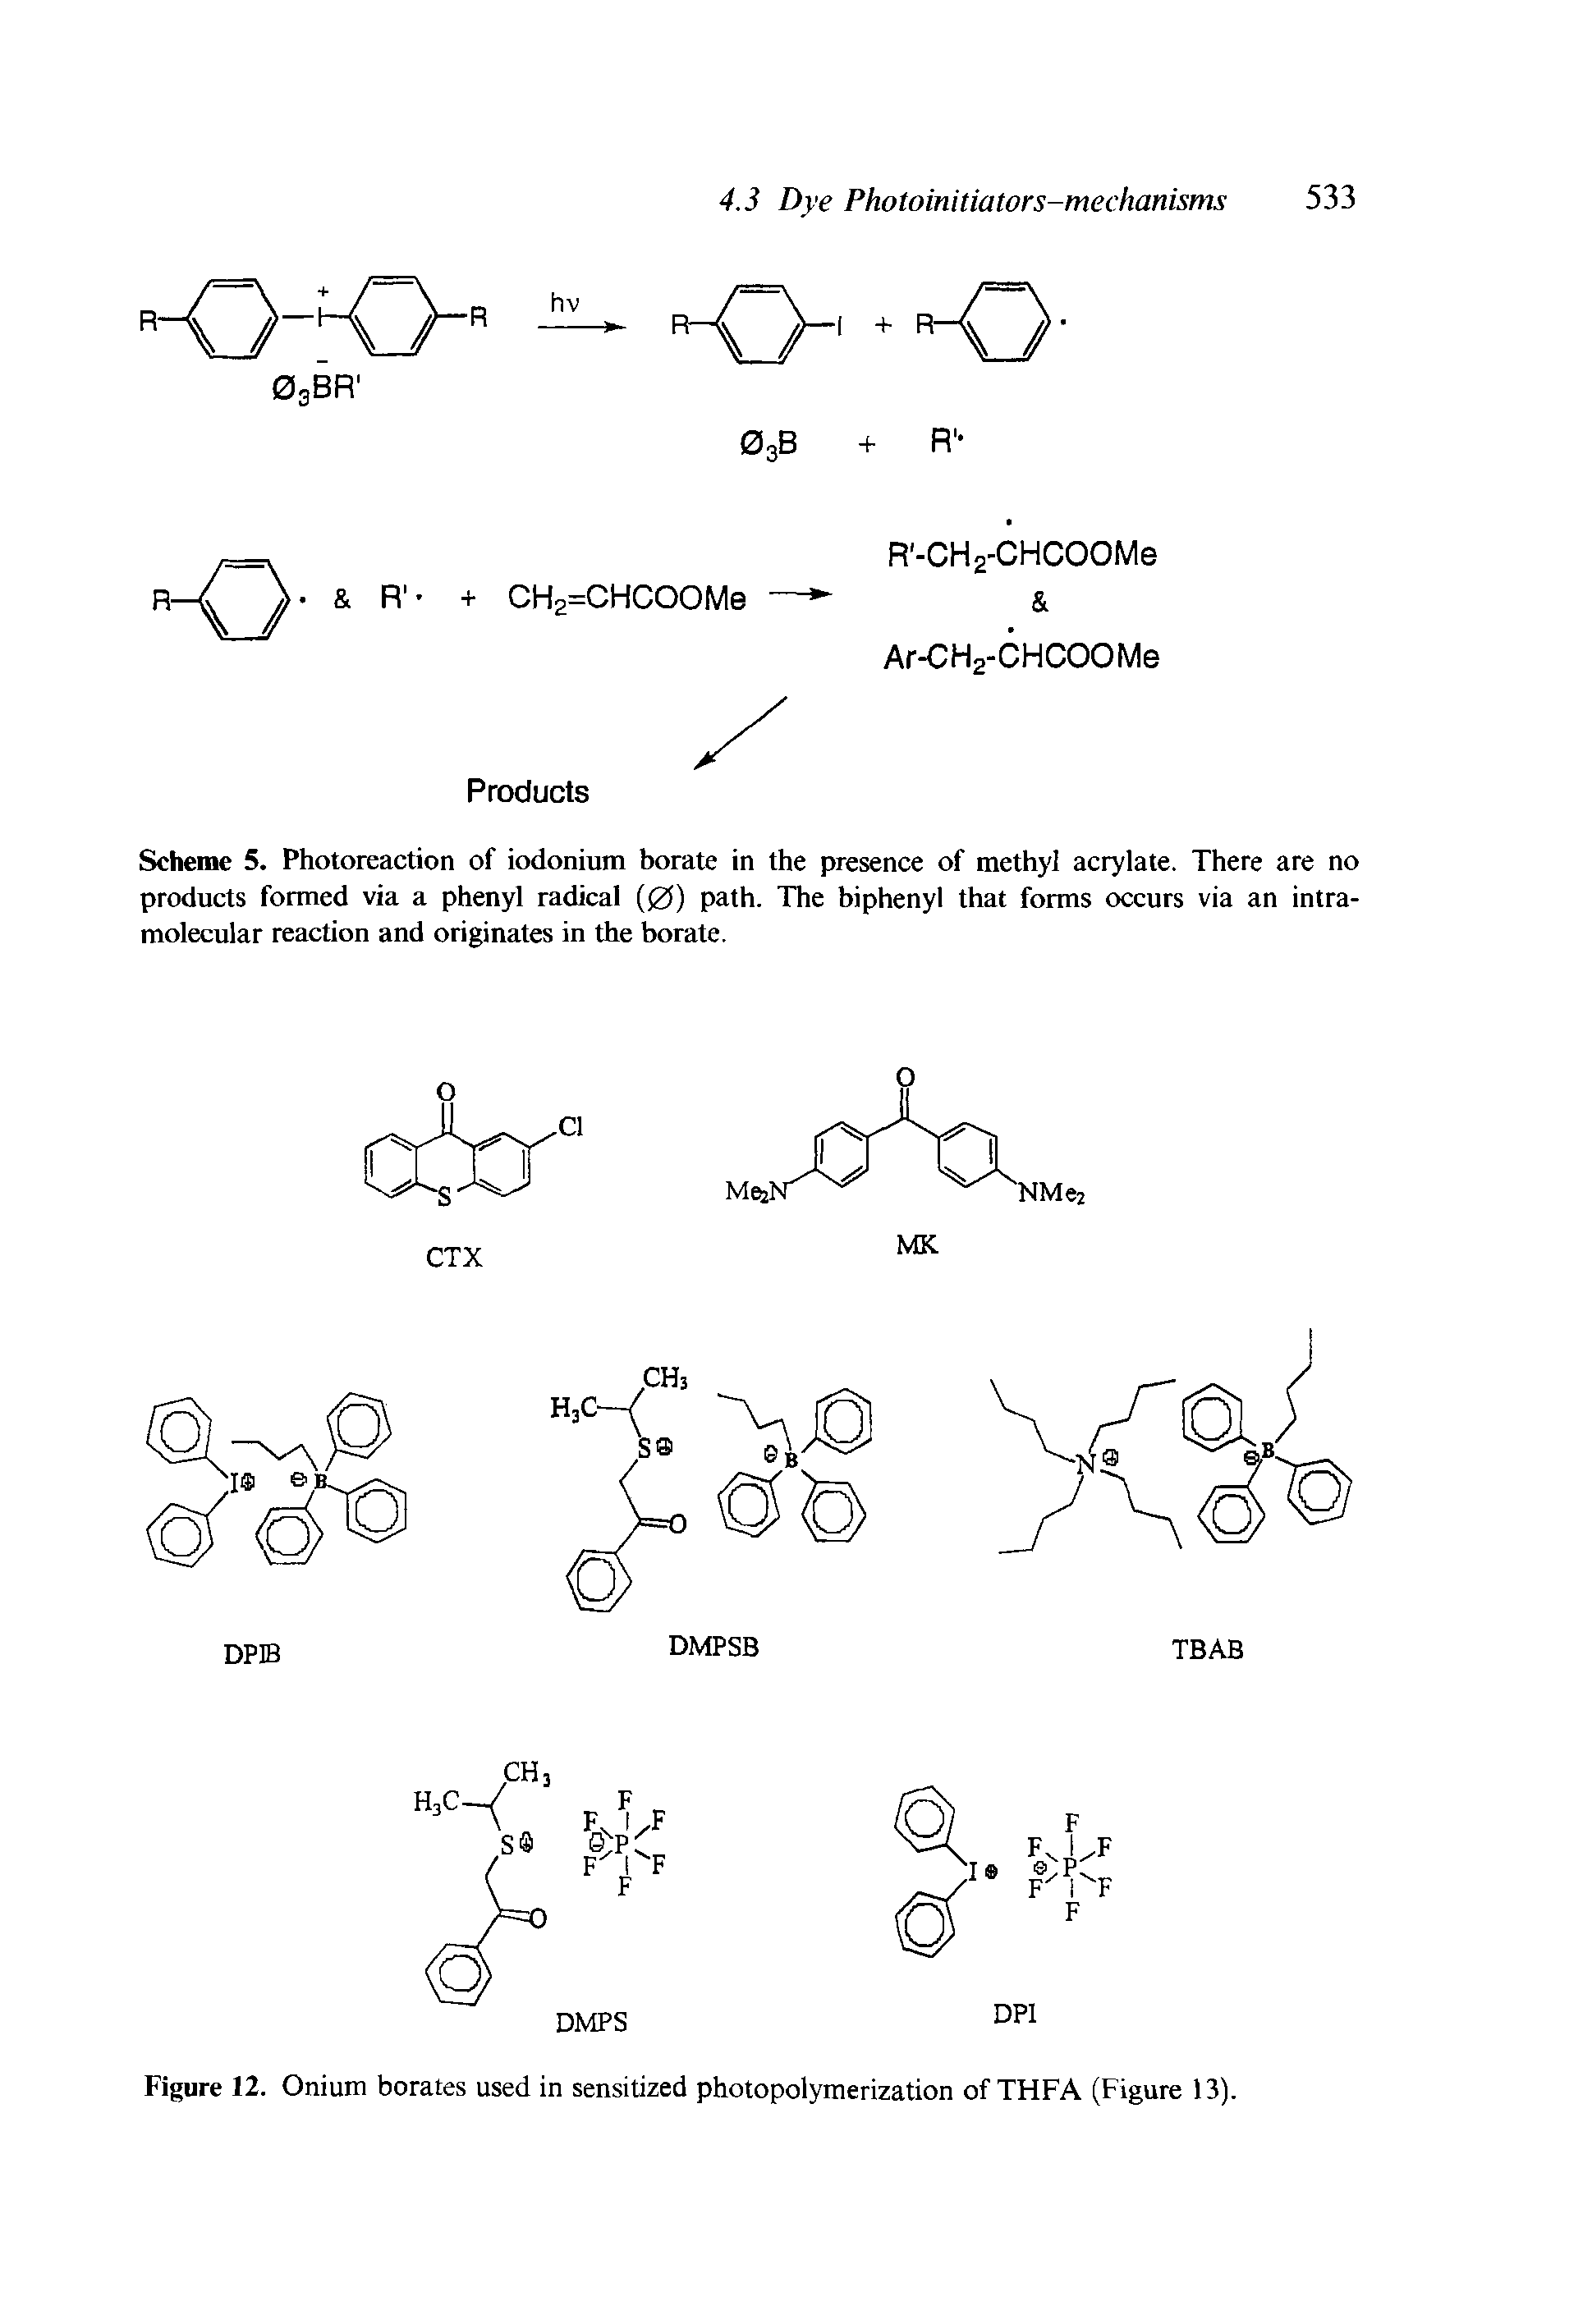 Figure 12. Onium borates used in sensitized photopolymerization of THFA (Figure 13).